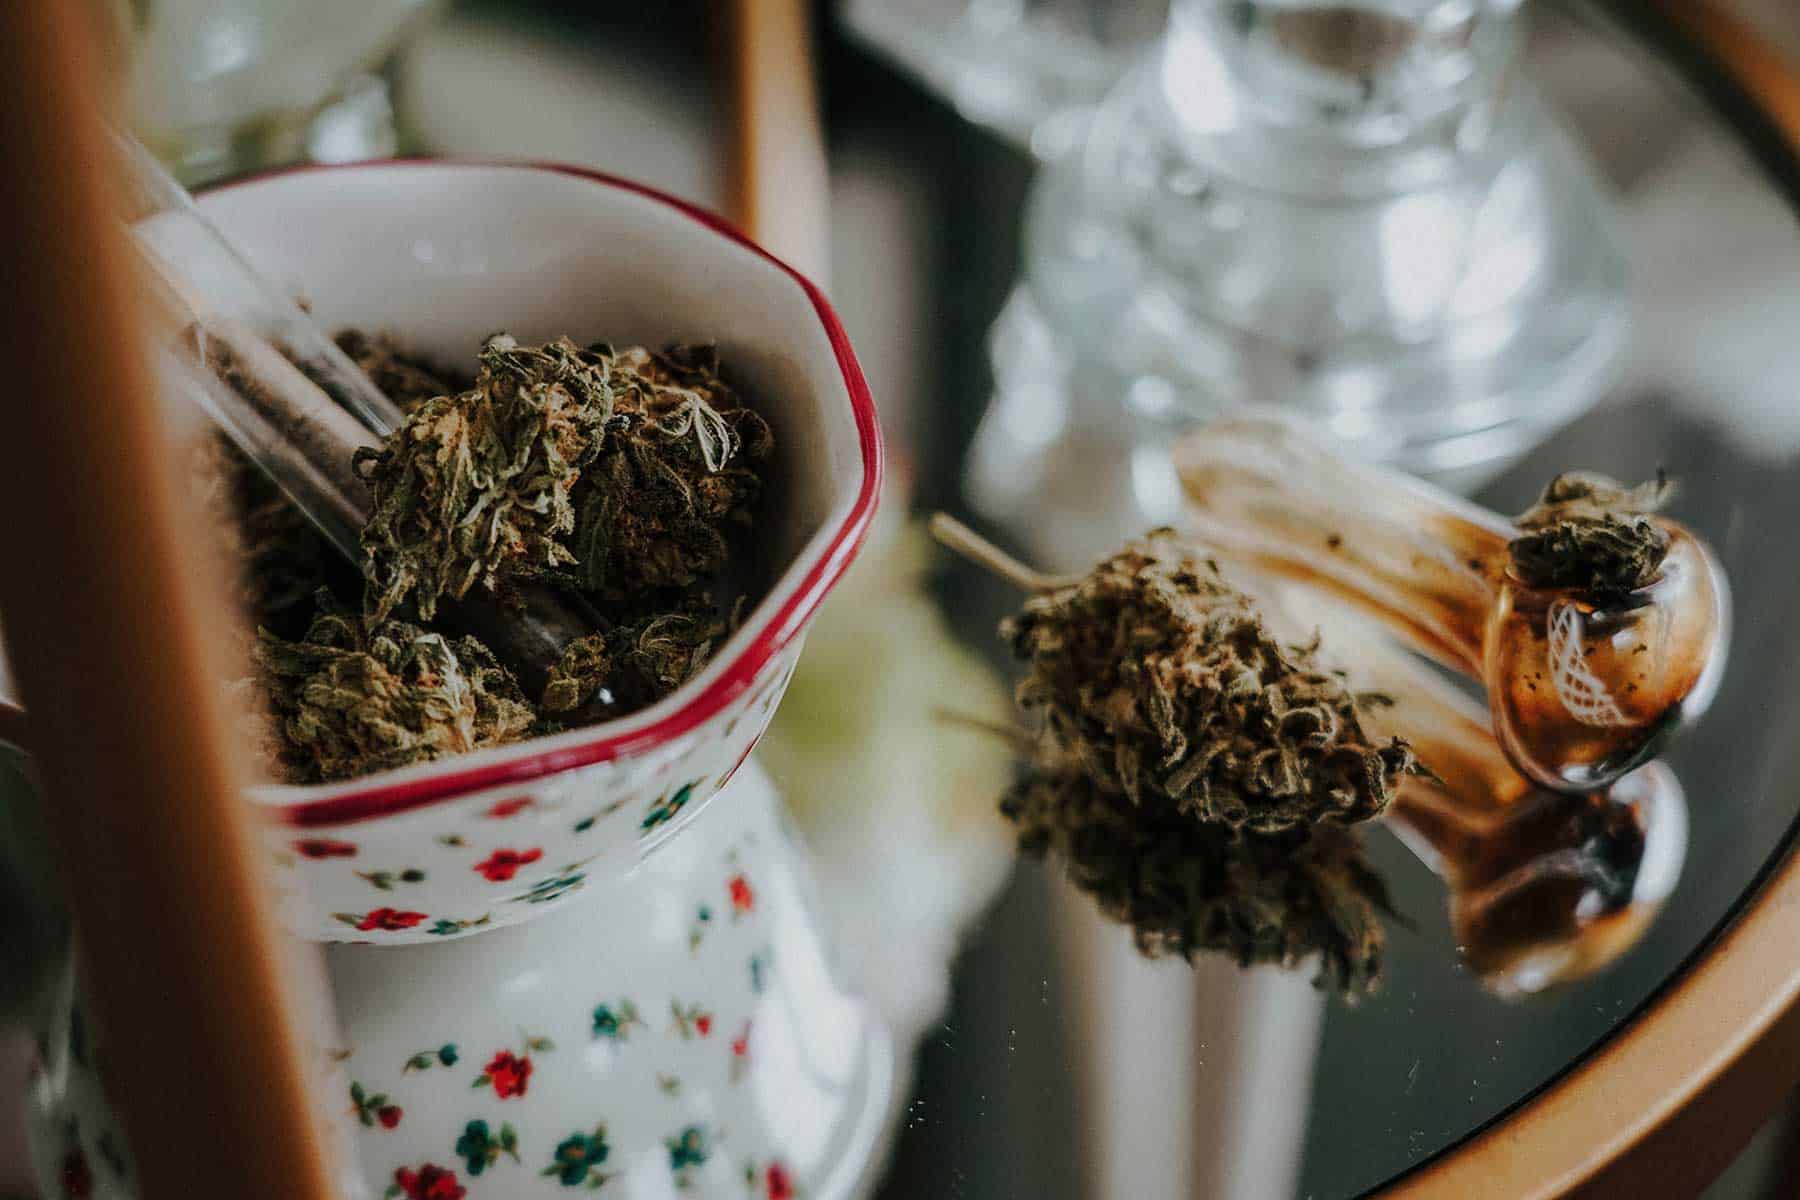 A Step-by-Step Guide: Preparing and Enjoying a Cannabis Bowl